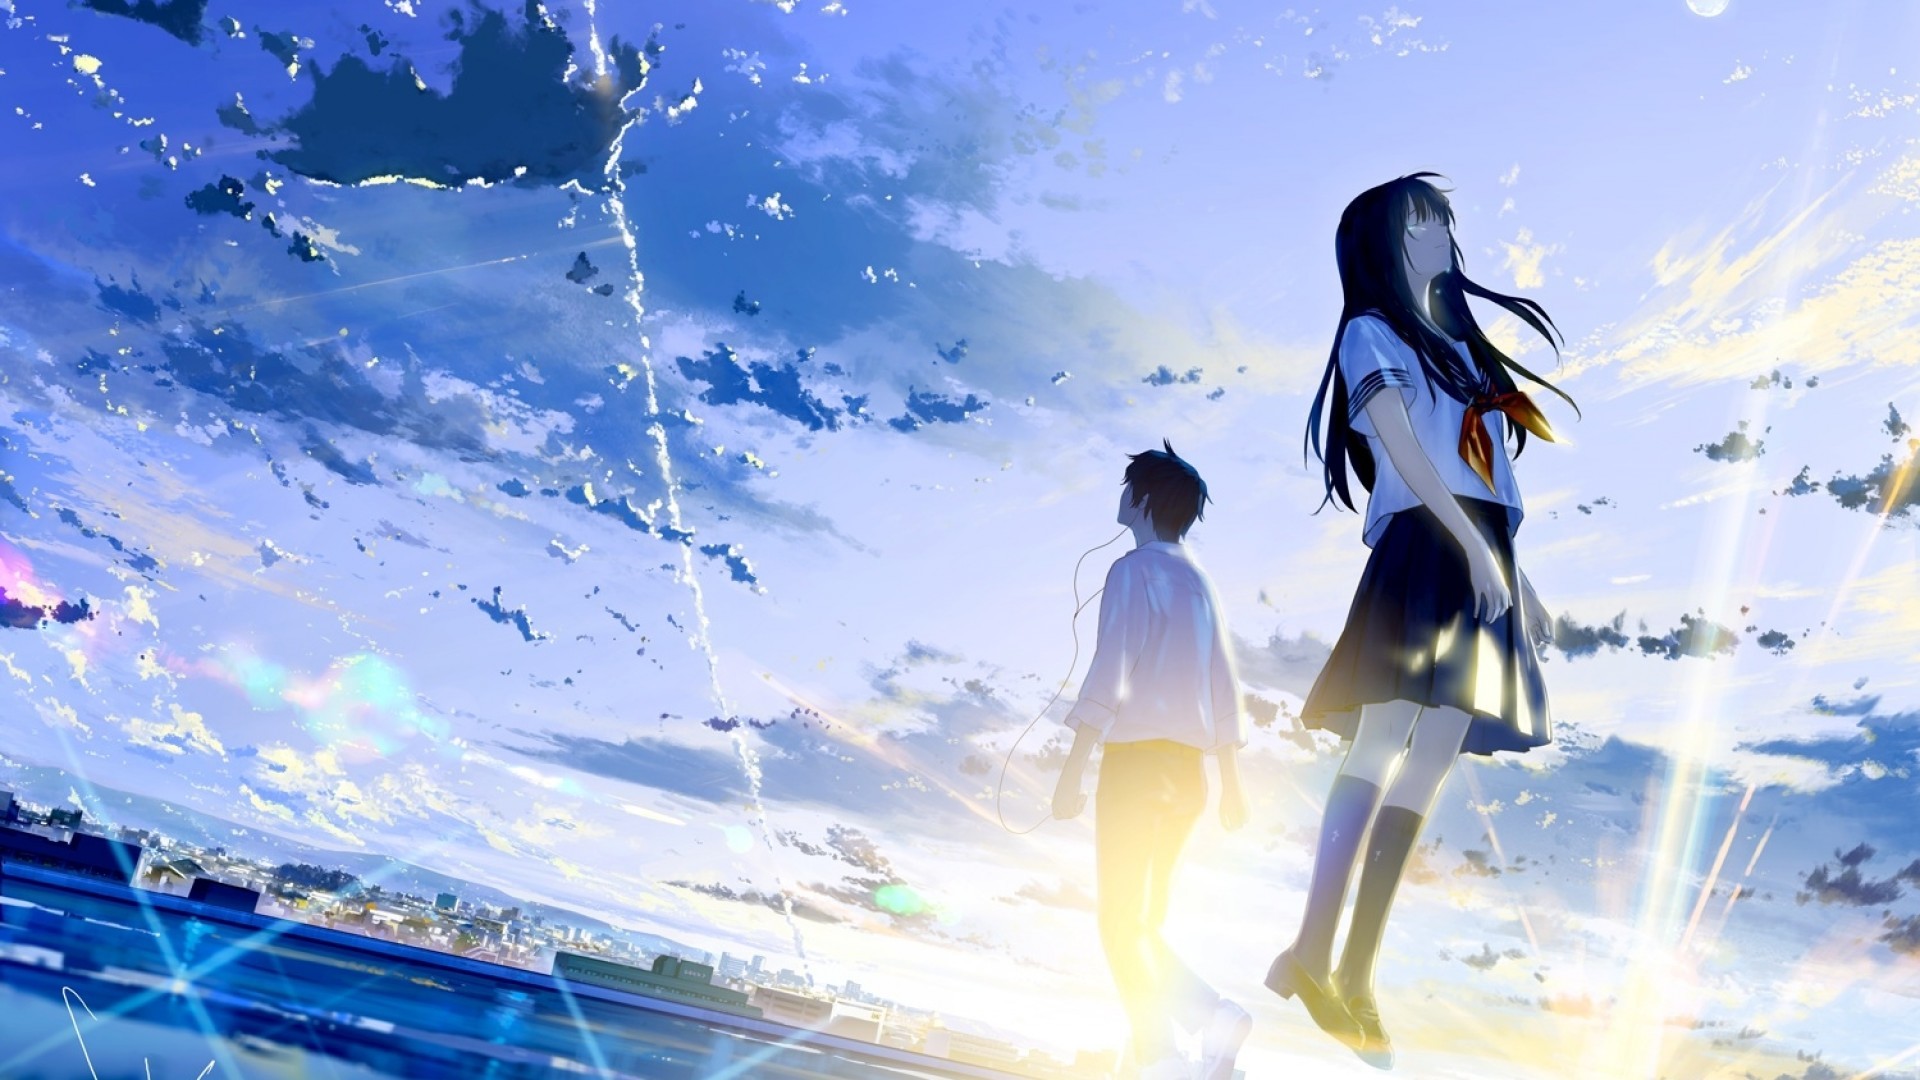 1920x1080 Anime Couple, Crying, Tears, Sky, Scenic, School Uniform, Clouds